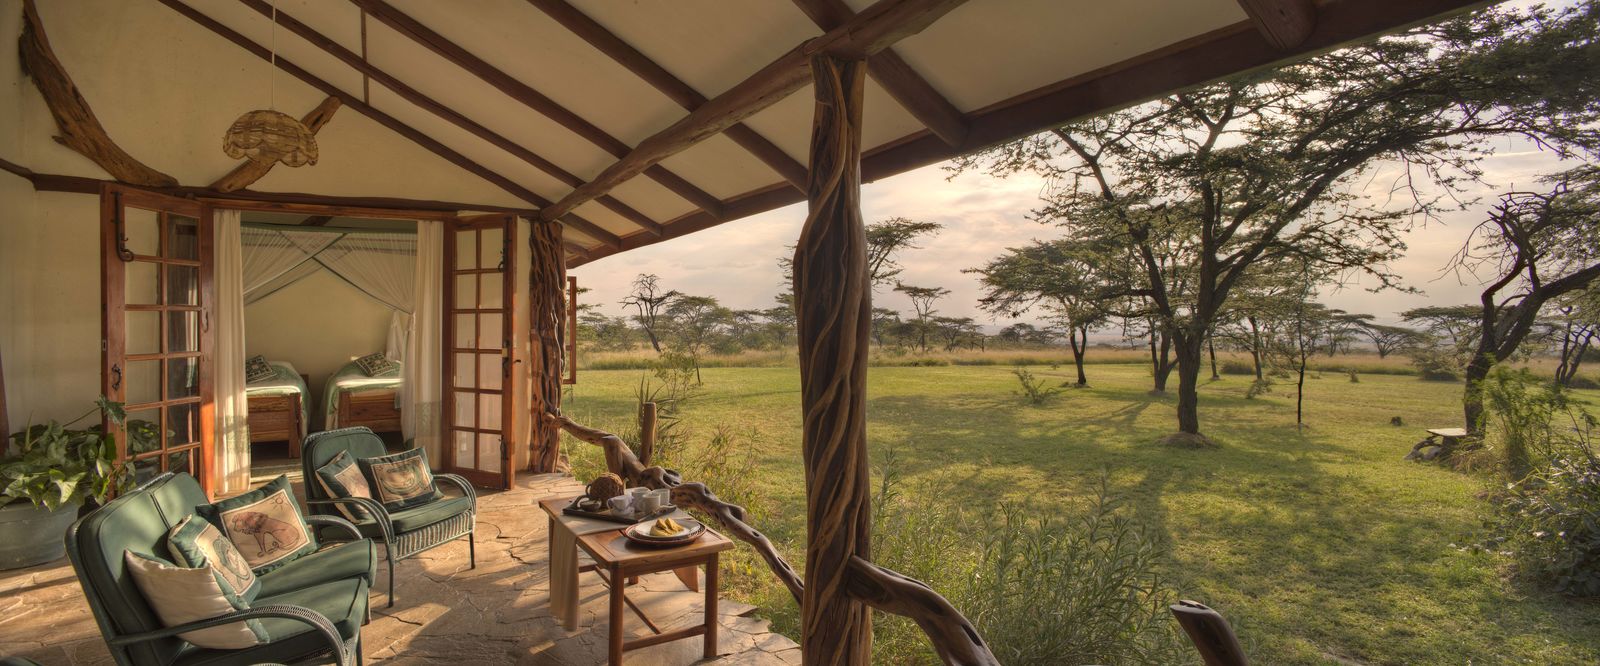 kenya a chacun son luxe maison